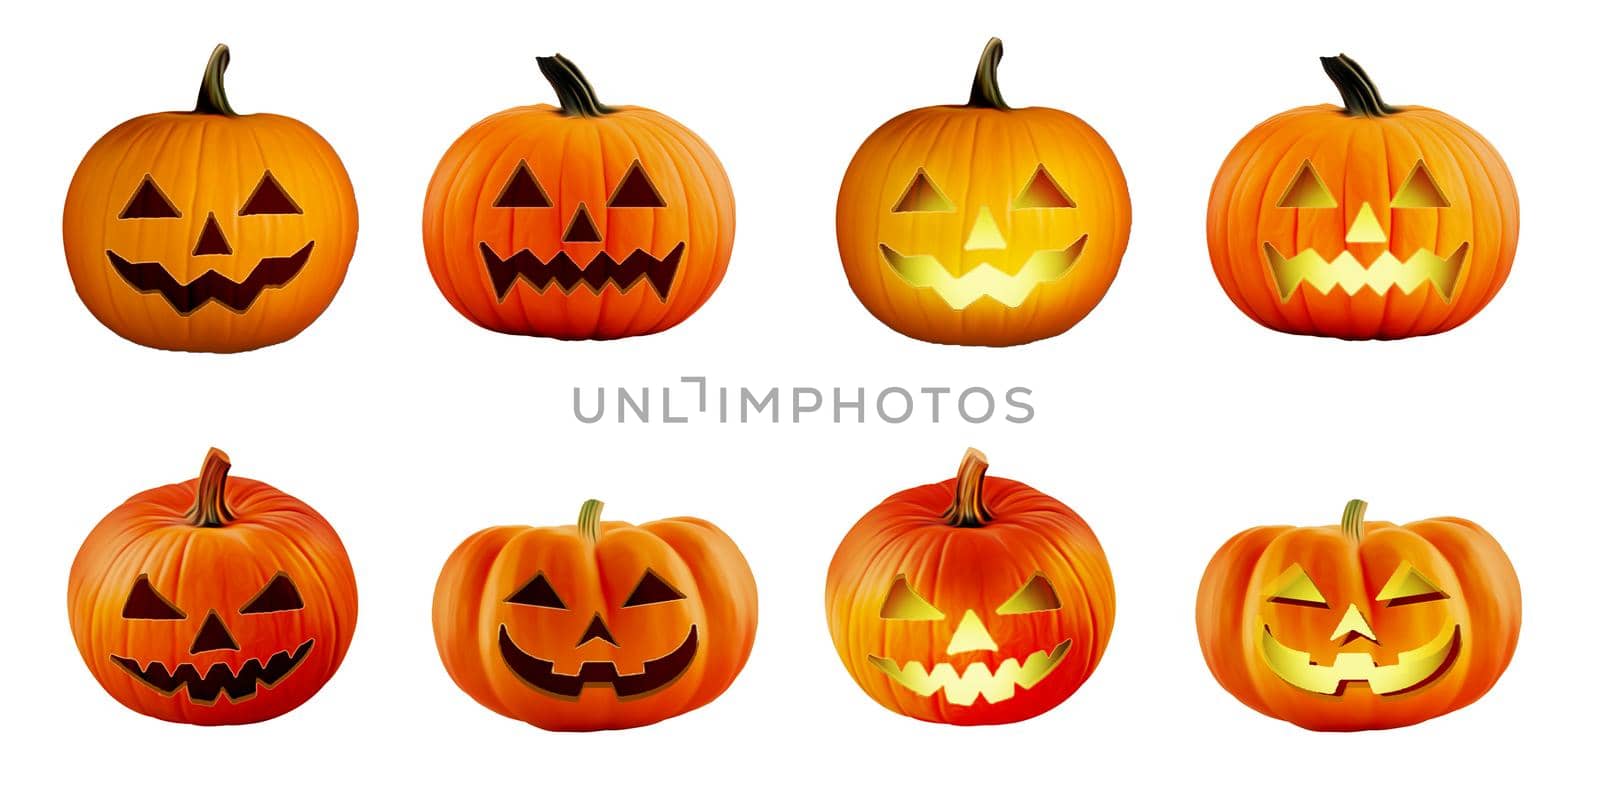 Halloween pumpkin head (jack o lantern) realistic illustration set by barks